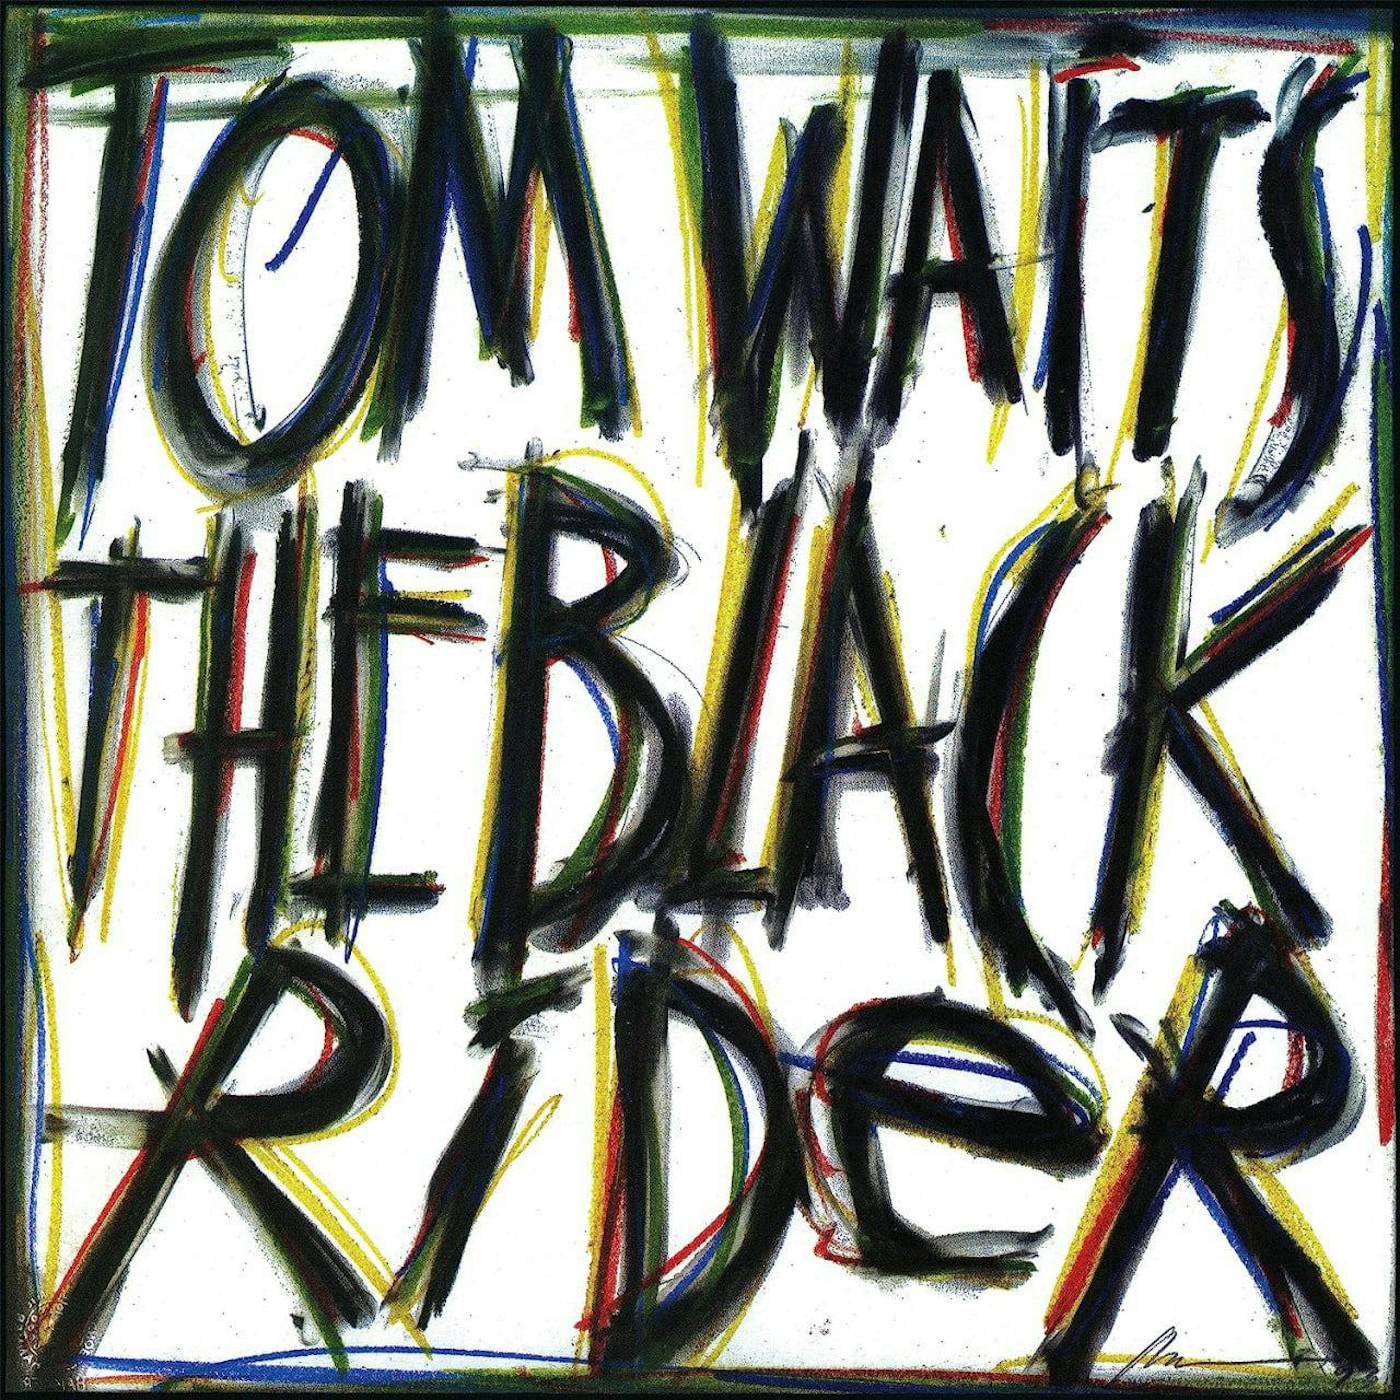 Tom Waits The Black Rider (180g) Vinyl Record